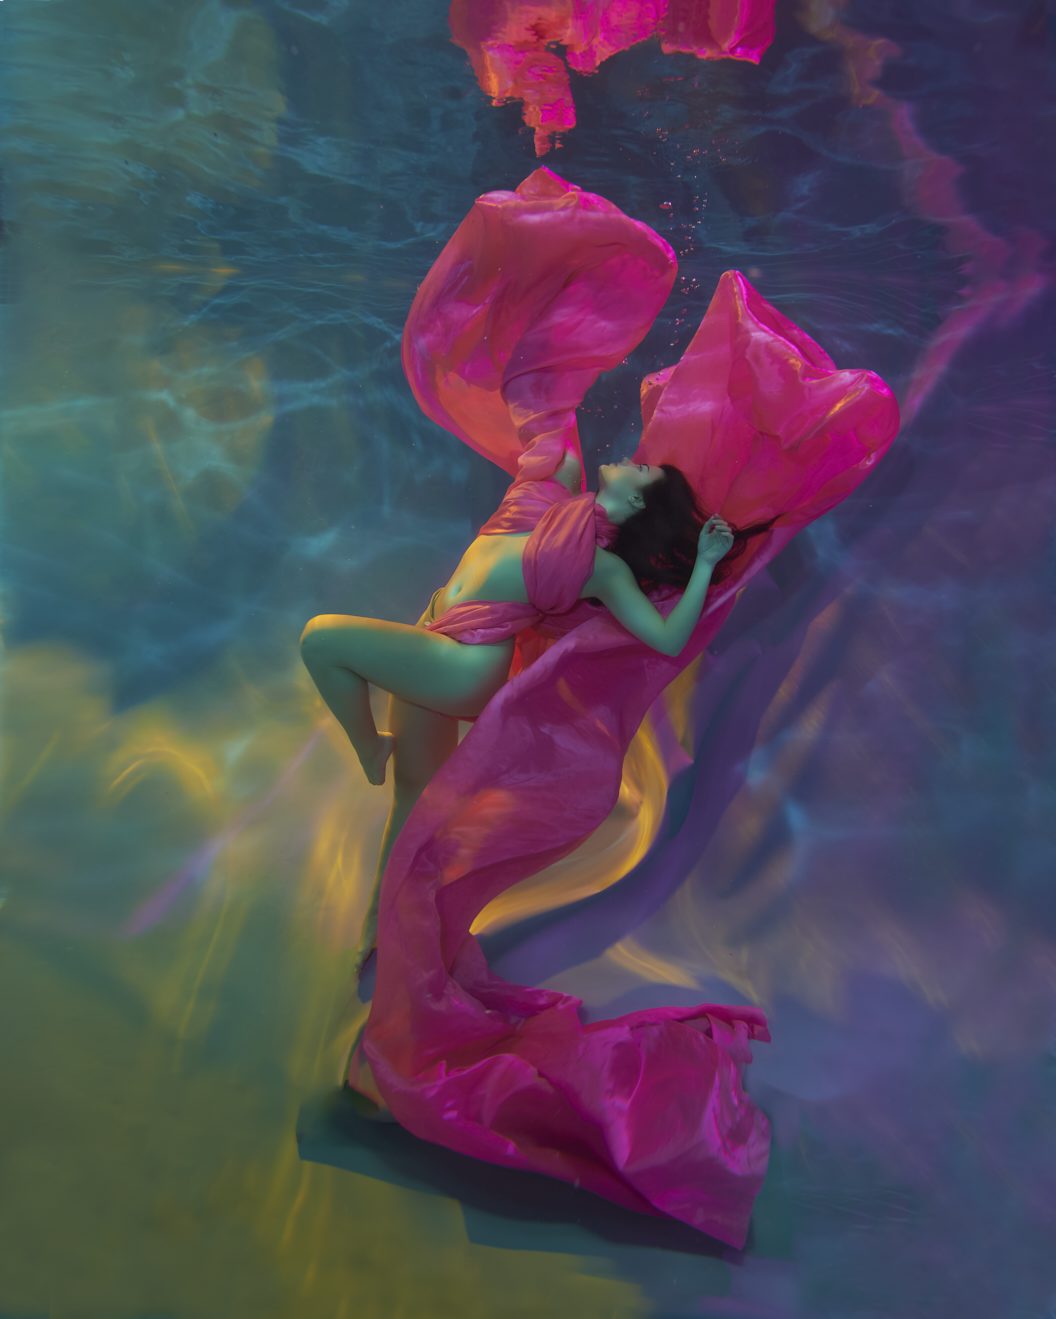 Stunning underwater image of model in satin